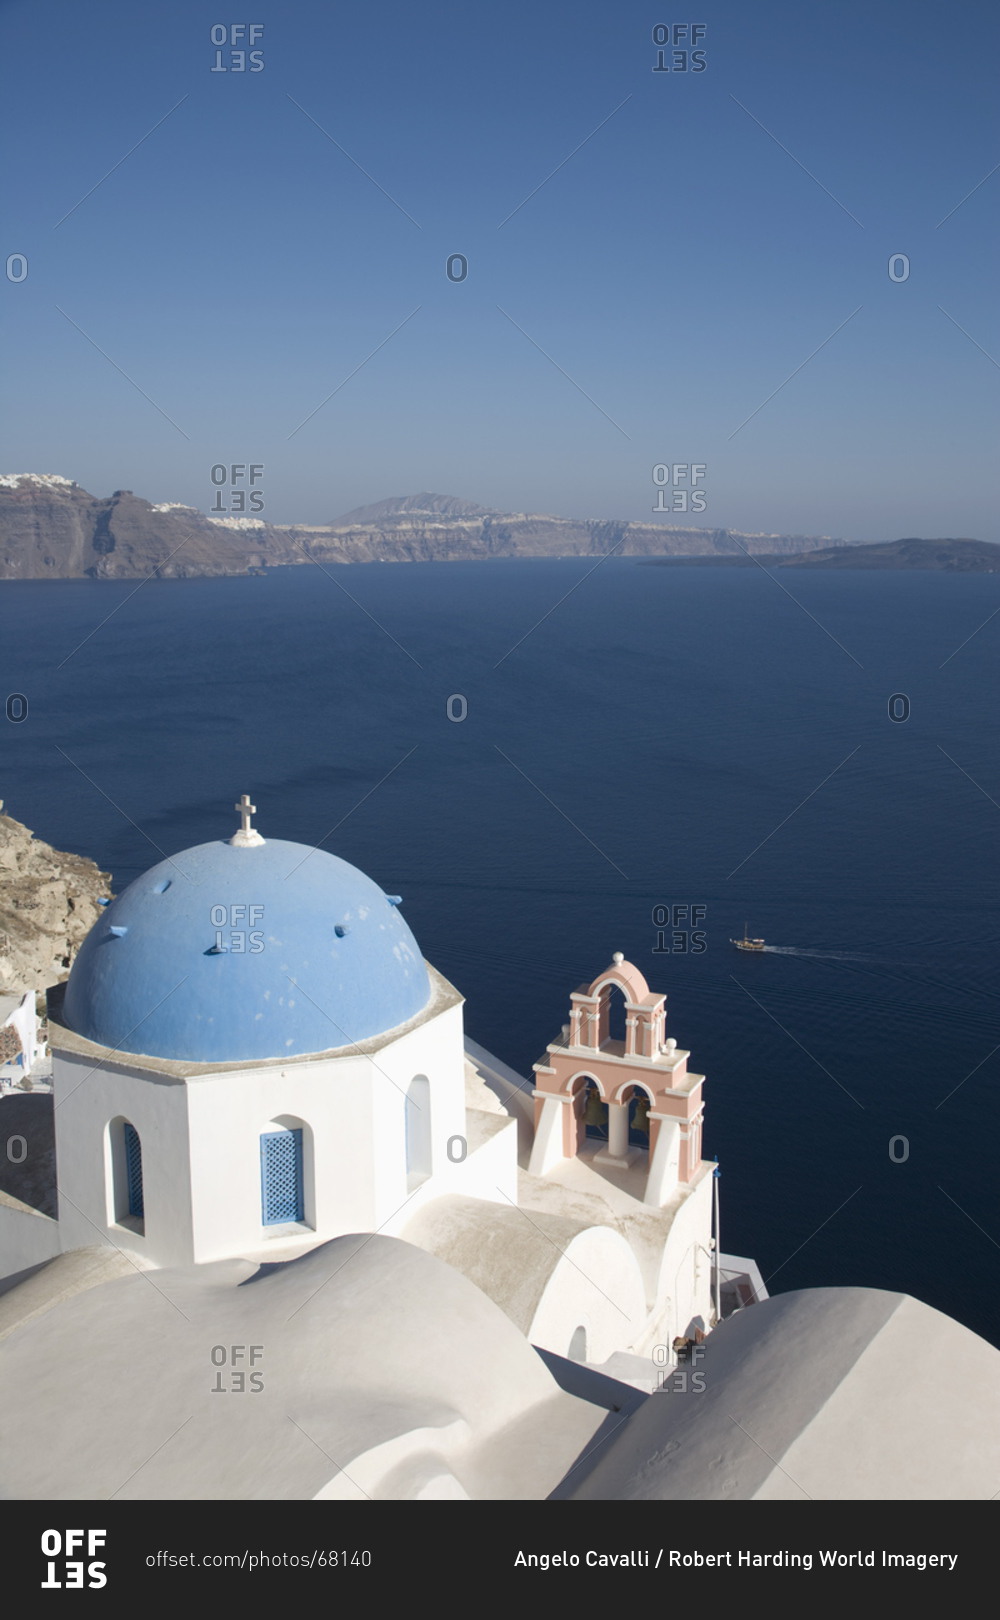 Oia, Santorini (Thira), Cyclades, Greek Islands, Greece, Europe